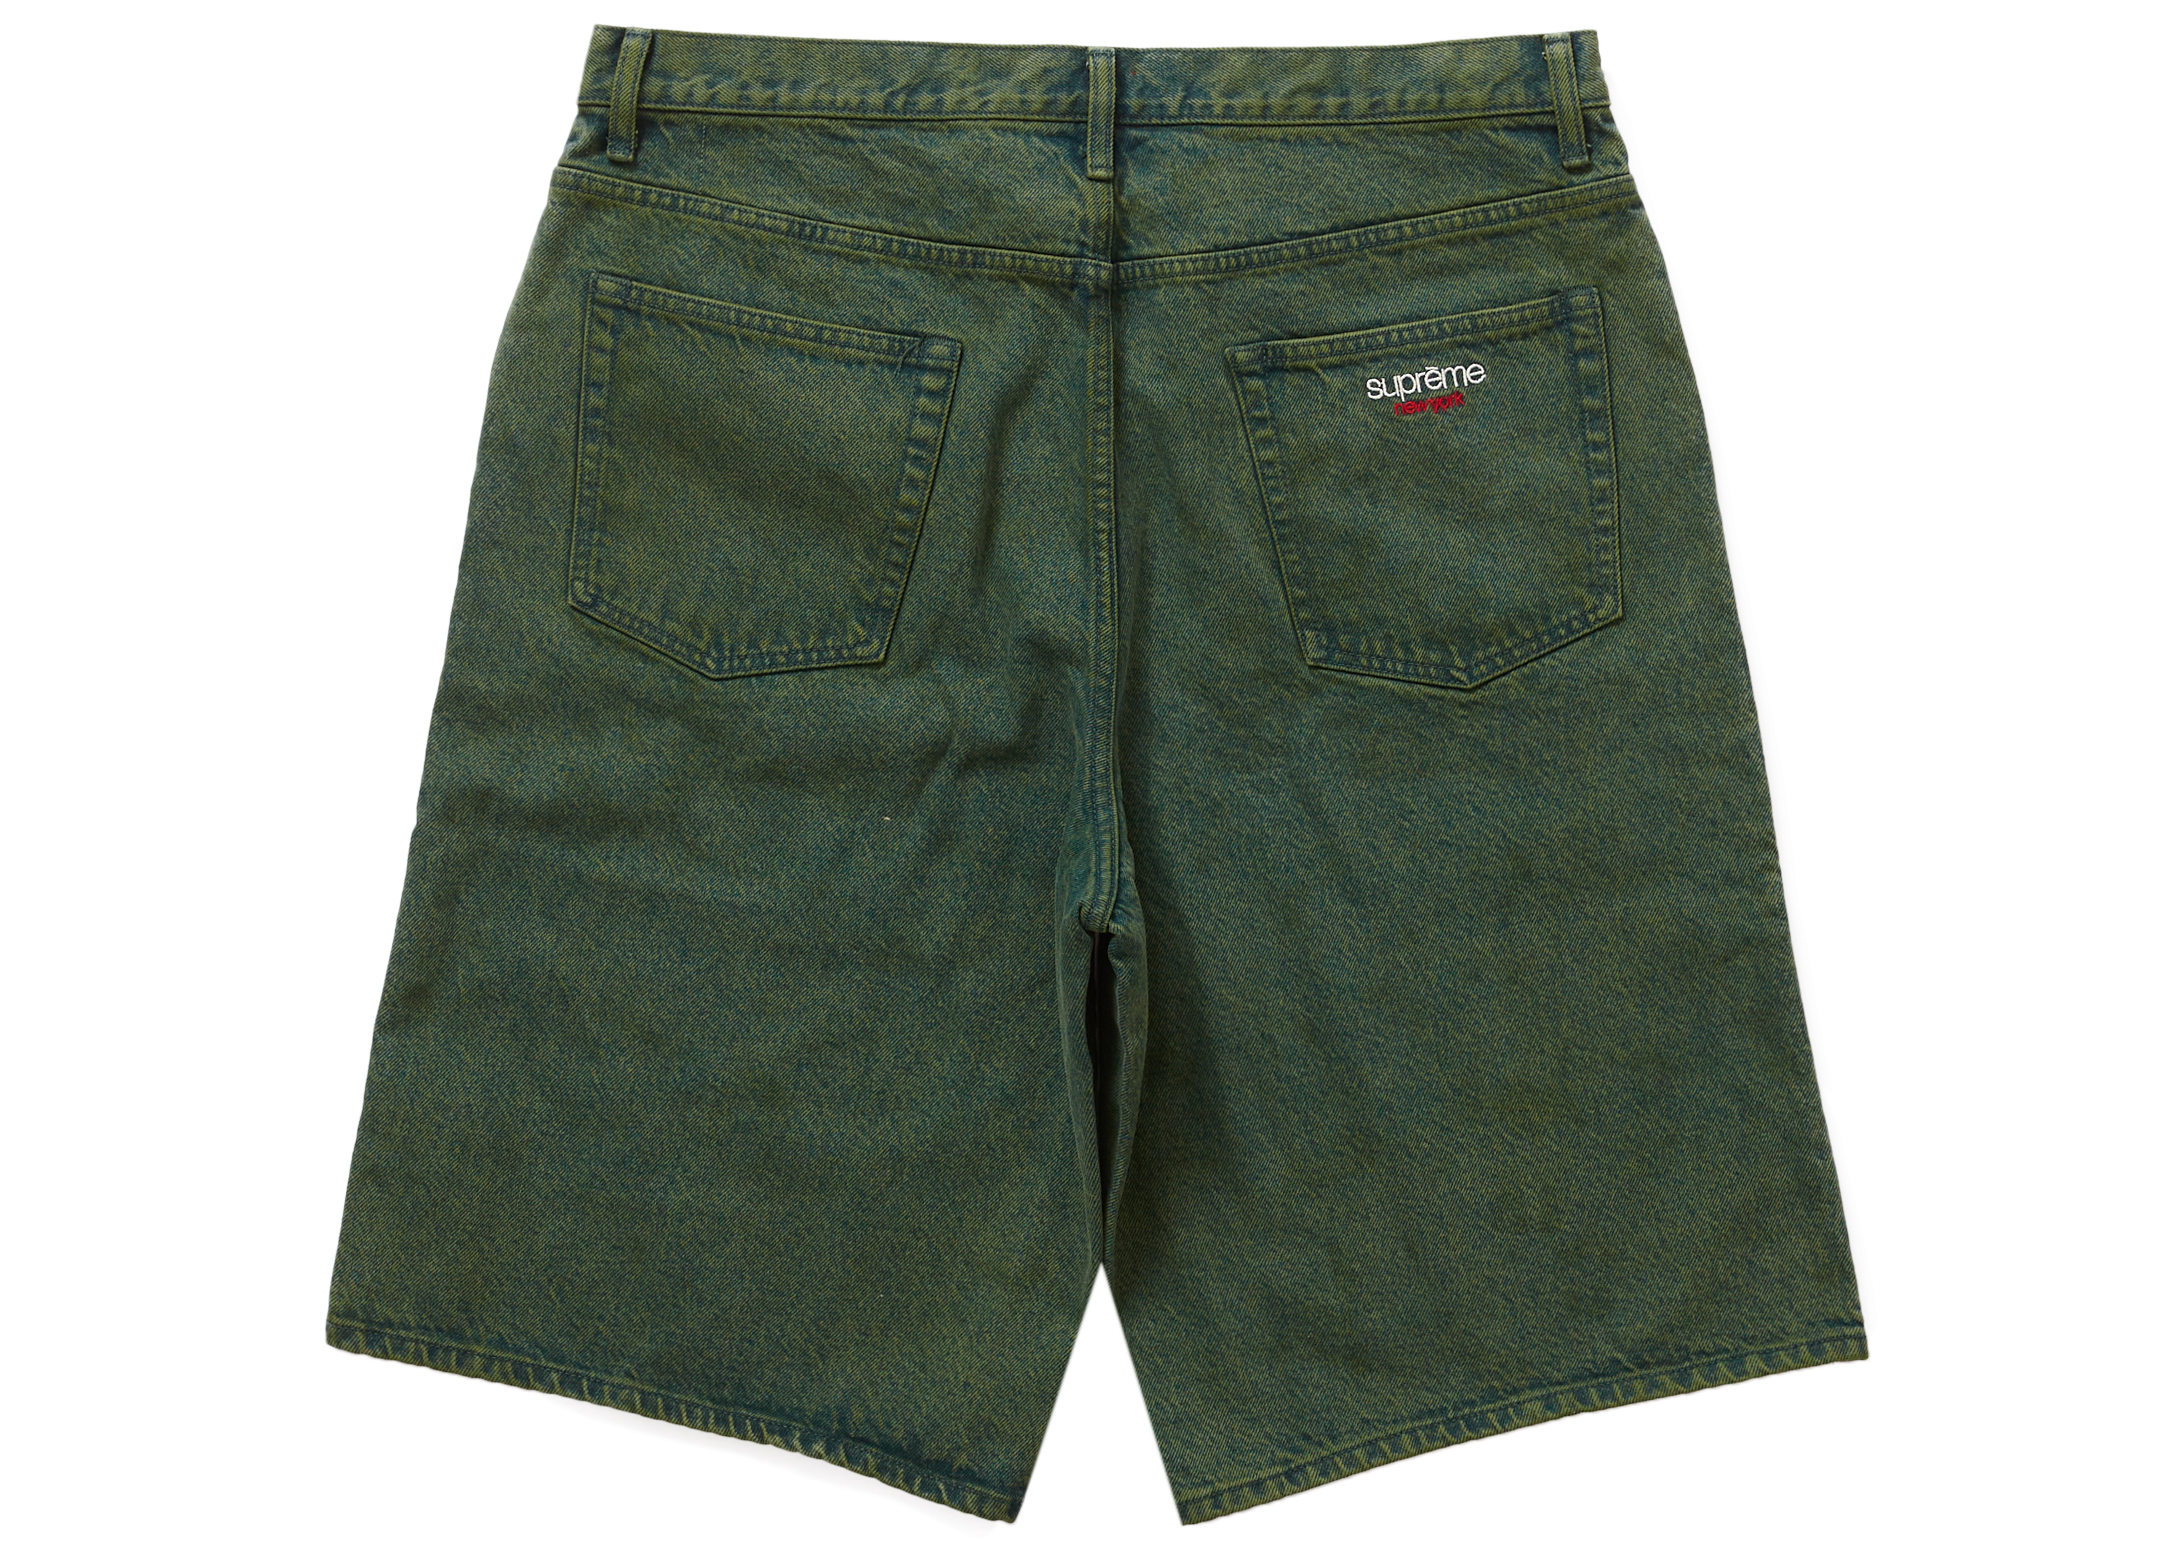 Supreme Green Corduroy jean size 32 jeans trousers pants Zippers  Skateboarding